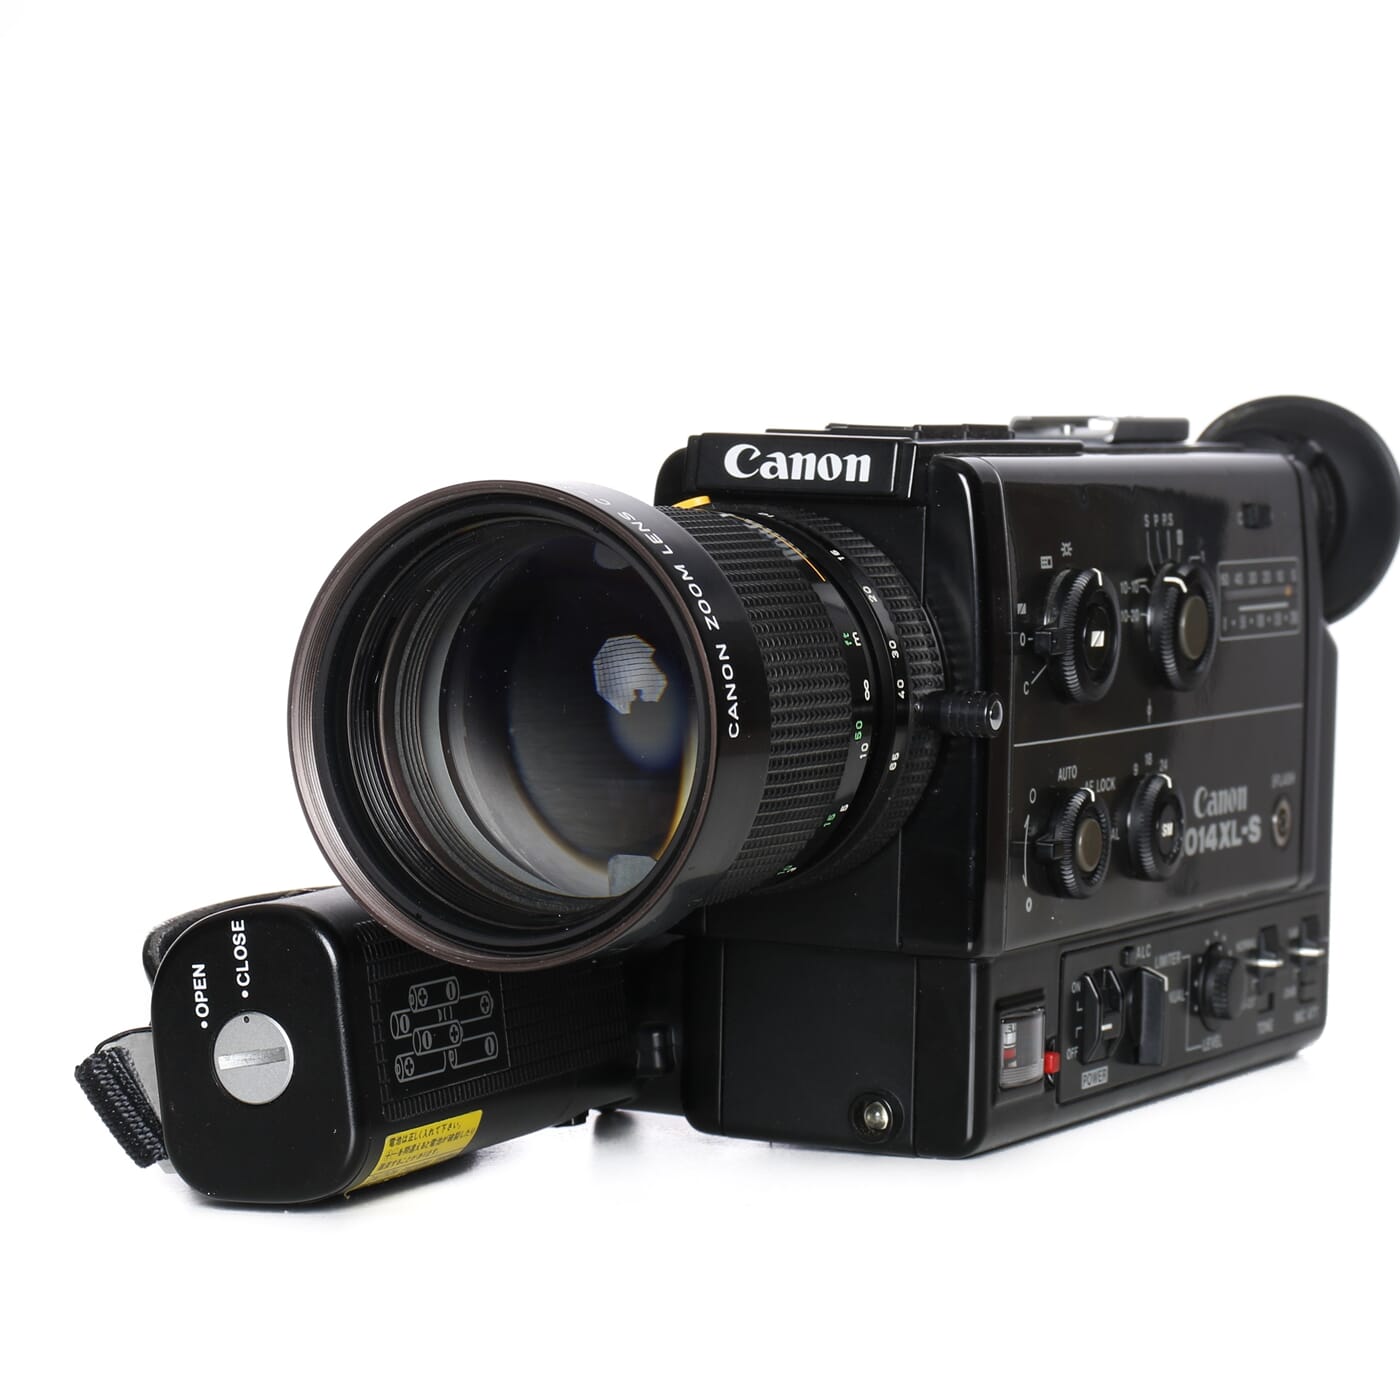 Brukt Canon 1014 XL-S Super-8 Kamera